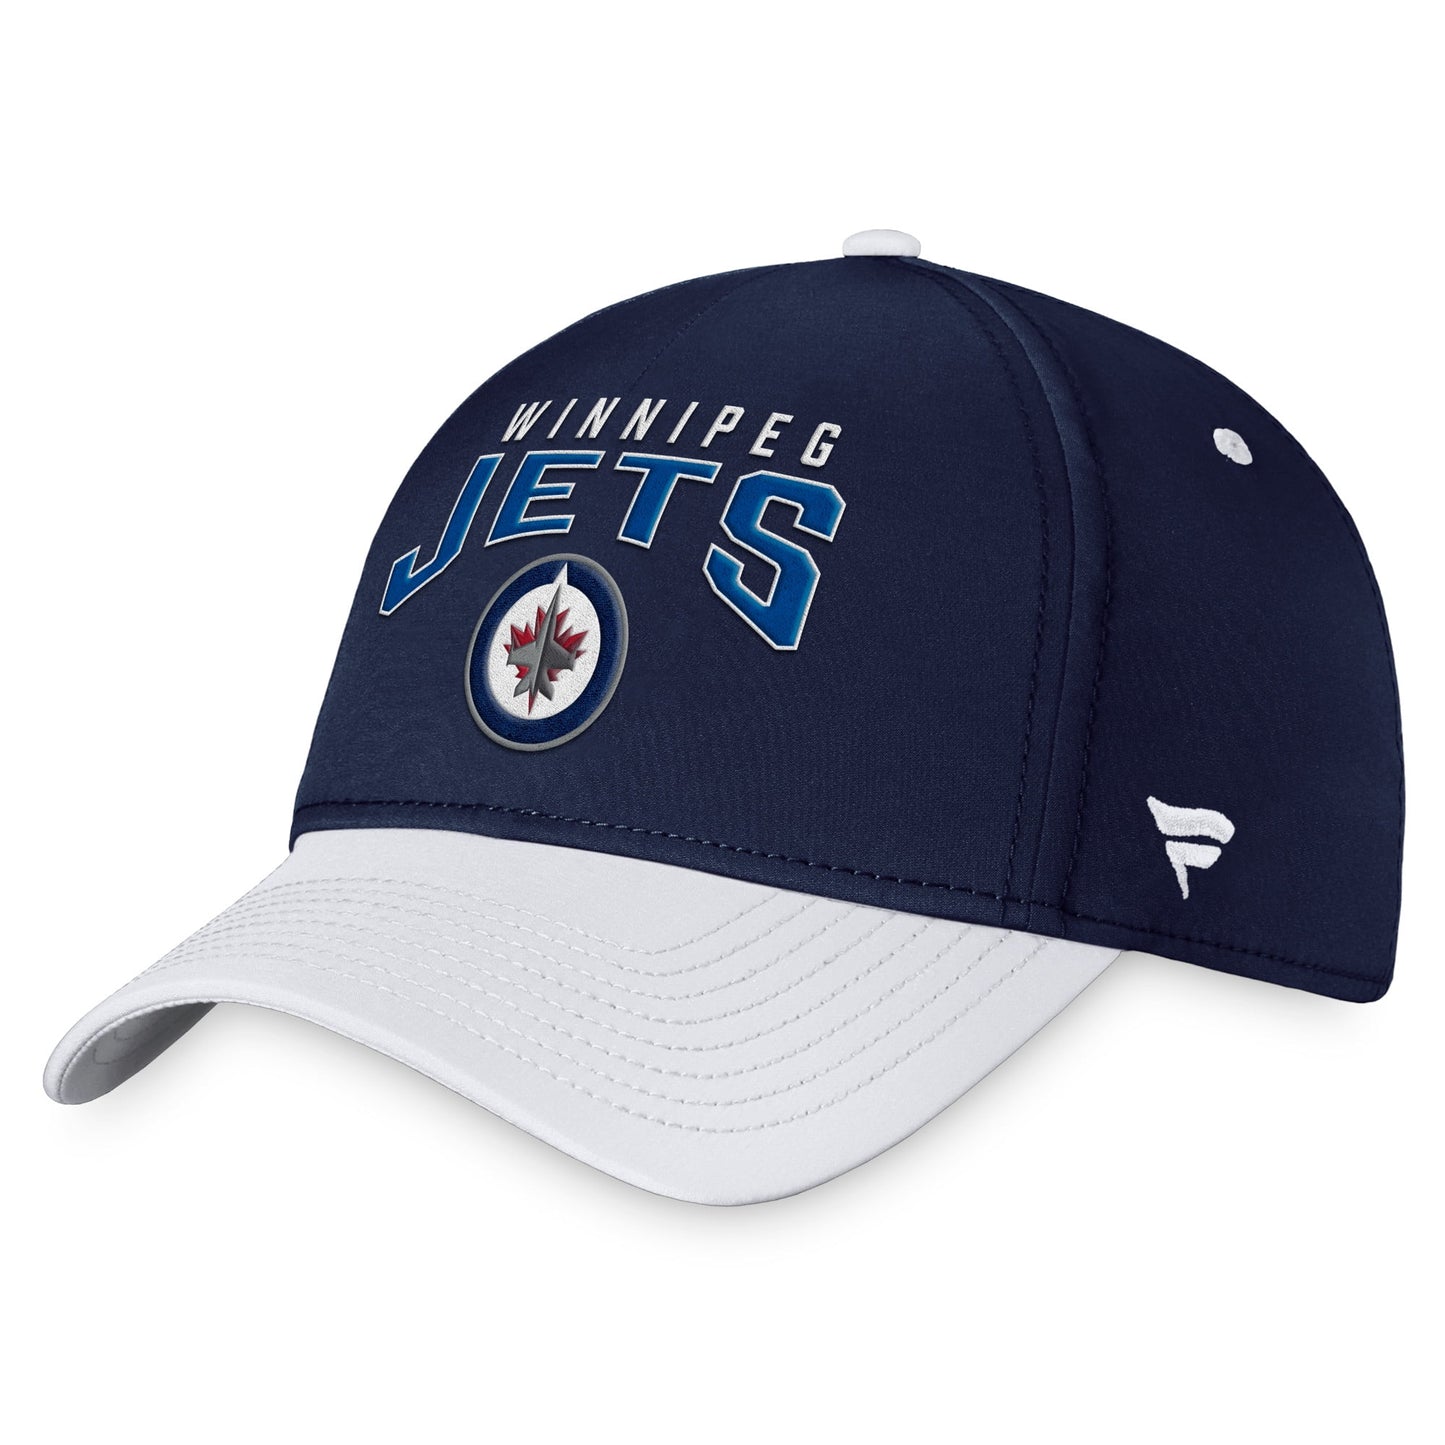 Men's Fanatics Branded Navy/White Winnipeg Jets Fundamental 2-Tone Flex Hat